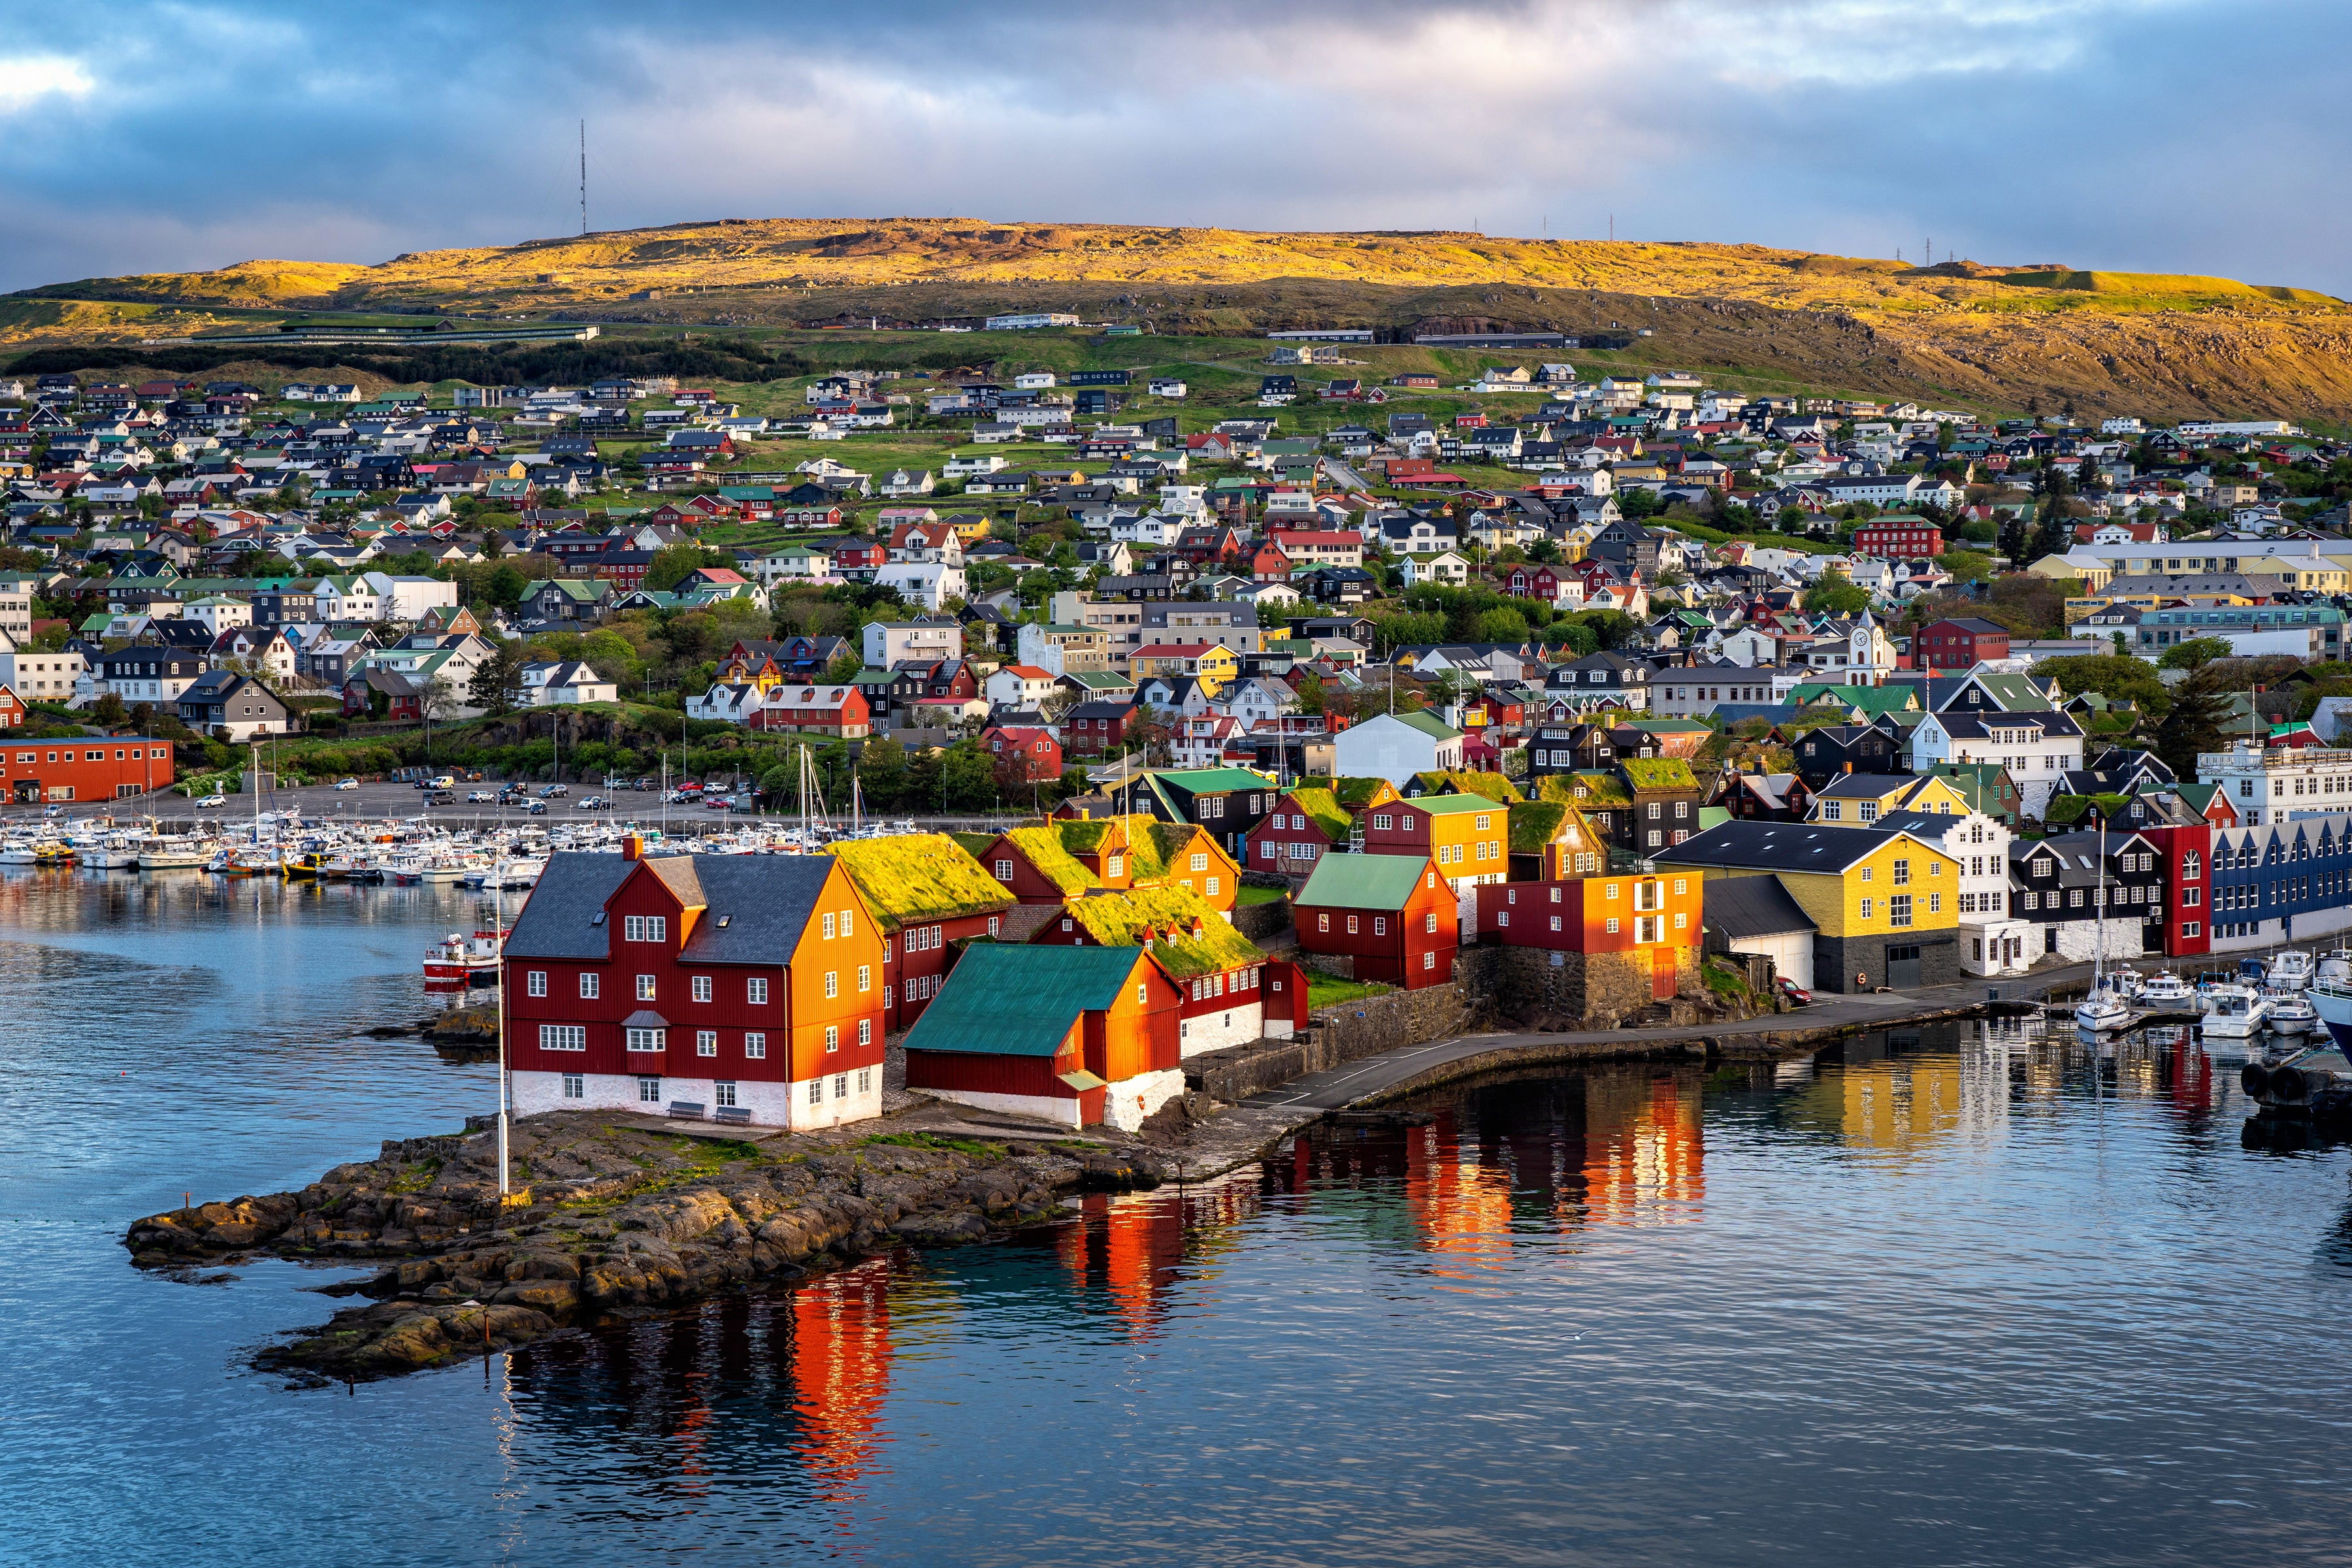 Torshavn, the quaint and compact capital of the Faroe Islands